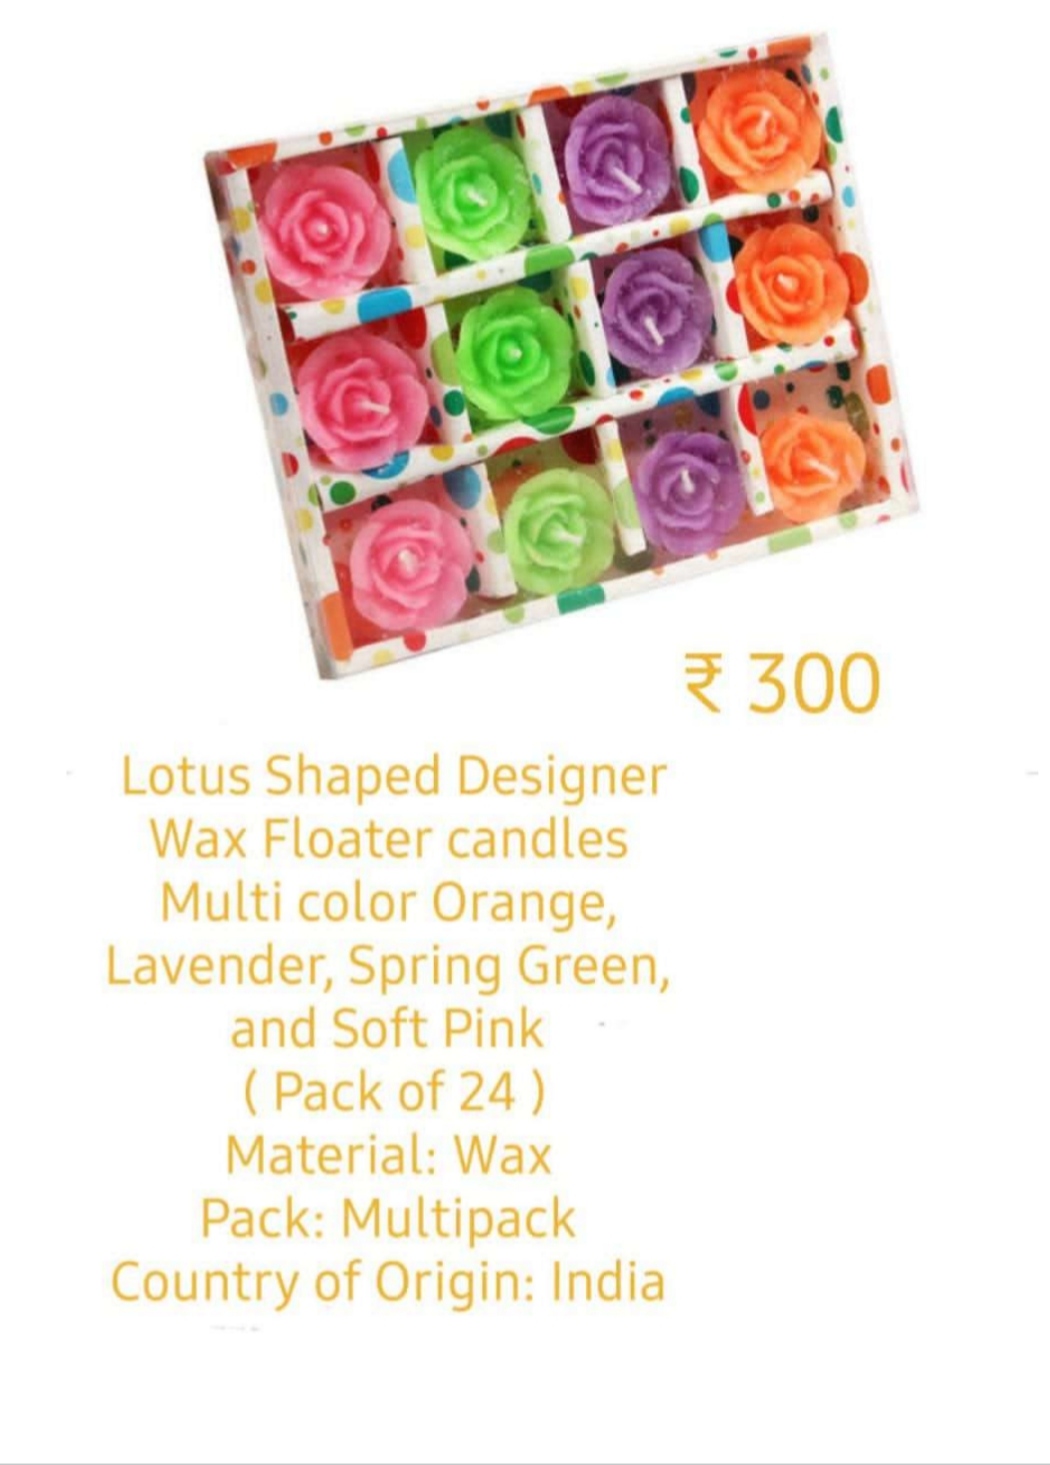 Lotus shaped designer candles from Veda's Decor Enterprises